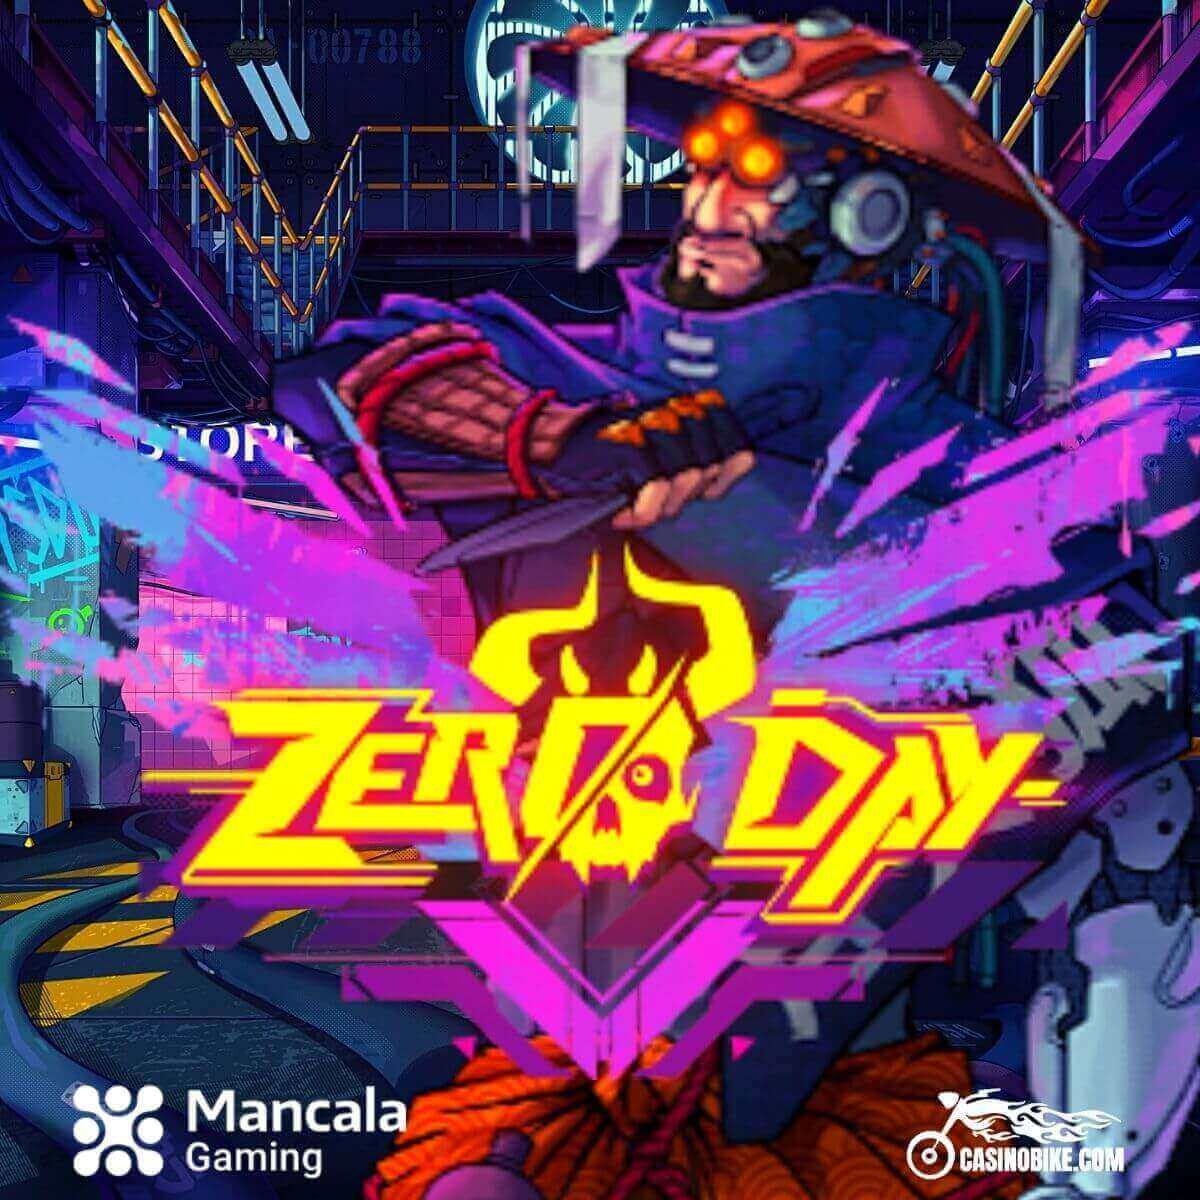 Zero Day Video Slot by Mancala Gaming